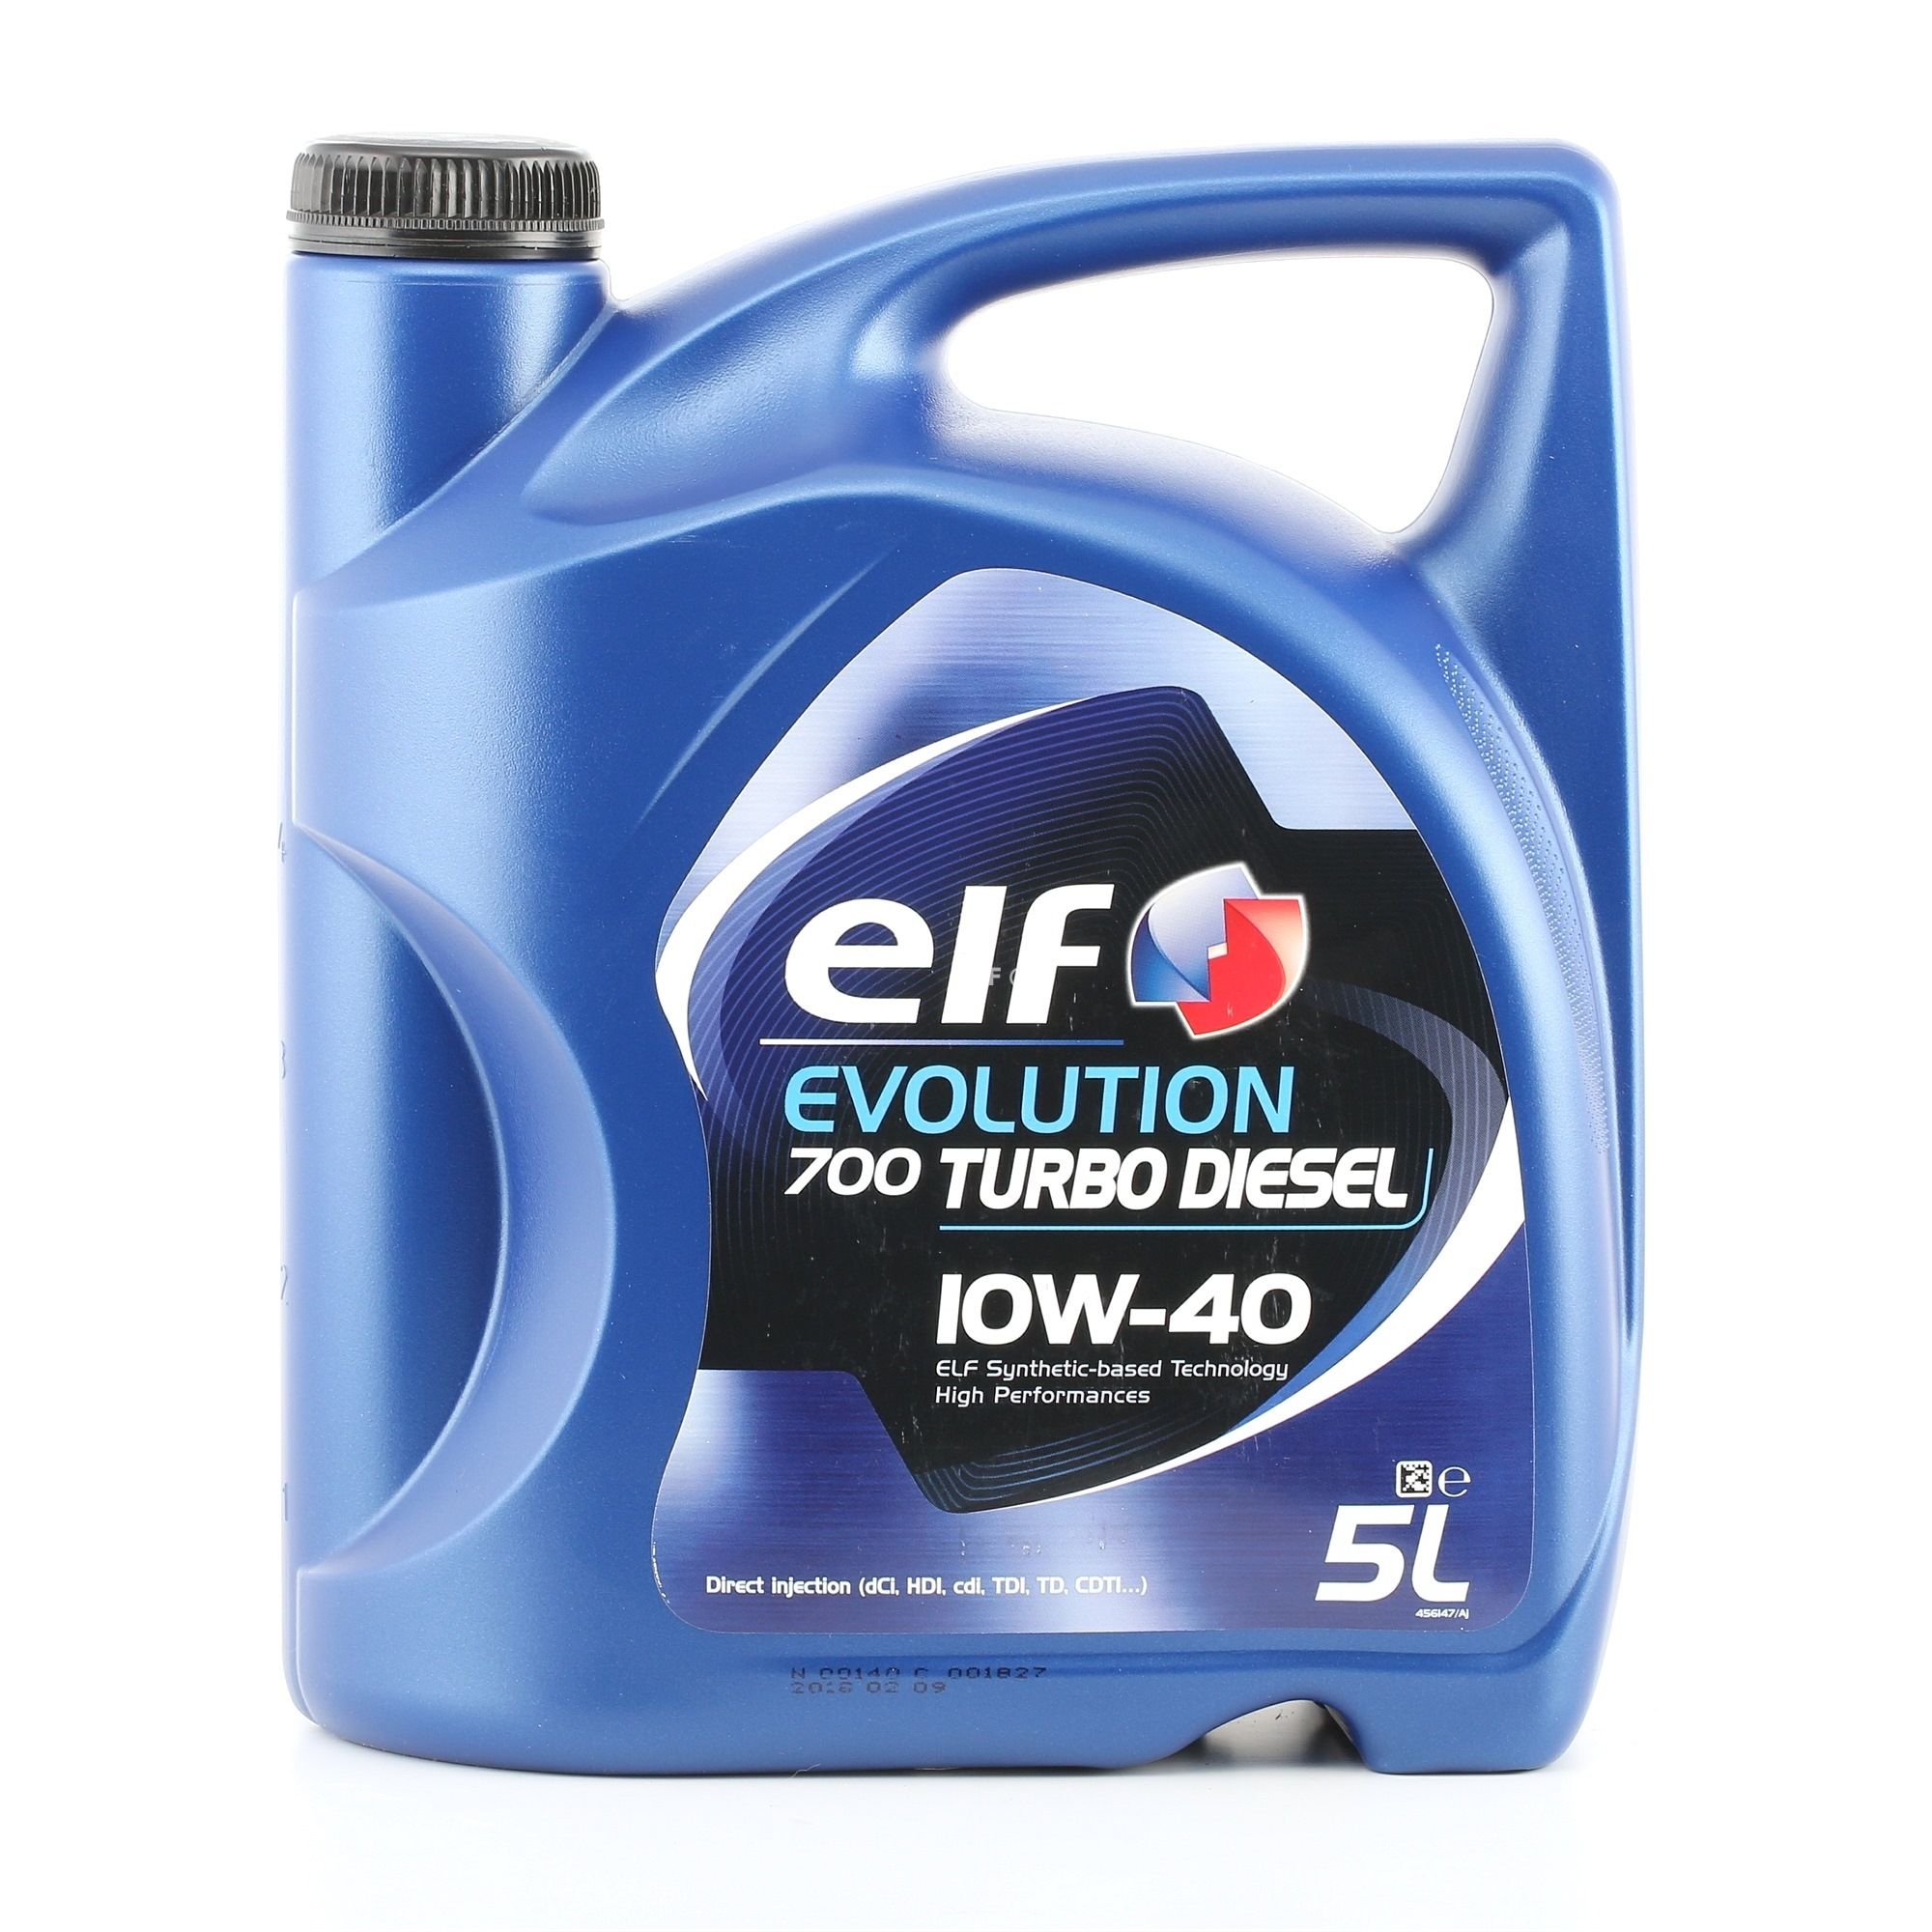 Comprar Aceite motor ELF 2204217 Evolution, 700 Turbo Diesel 10W-40, 5L, aceite parcialmente sintético